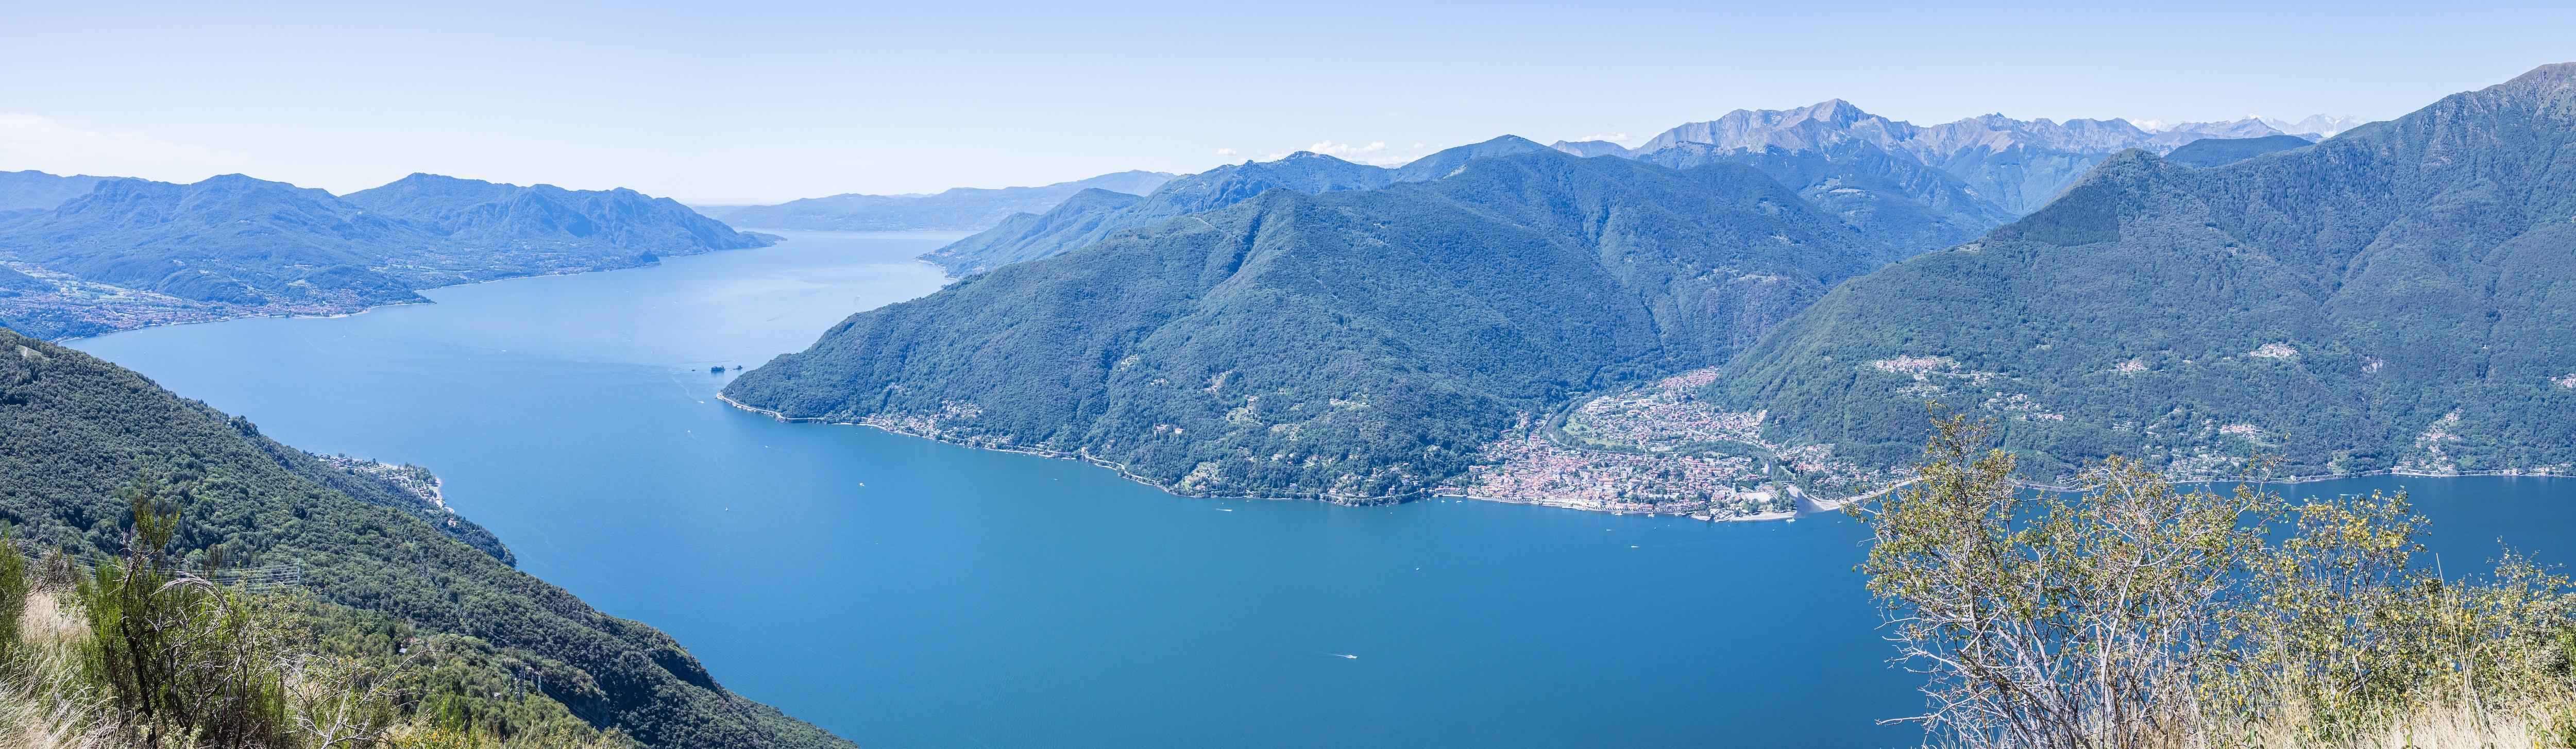 Panorama du lac Majeur en Italie